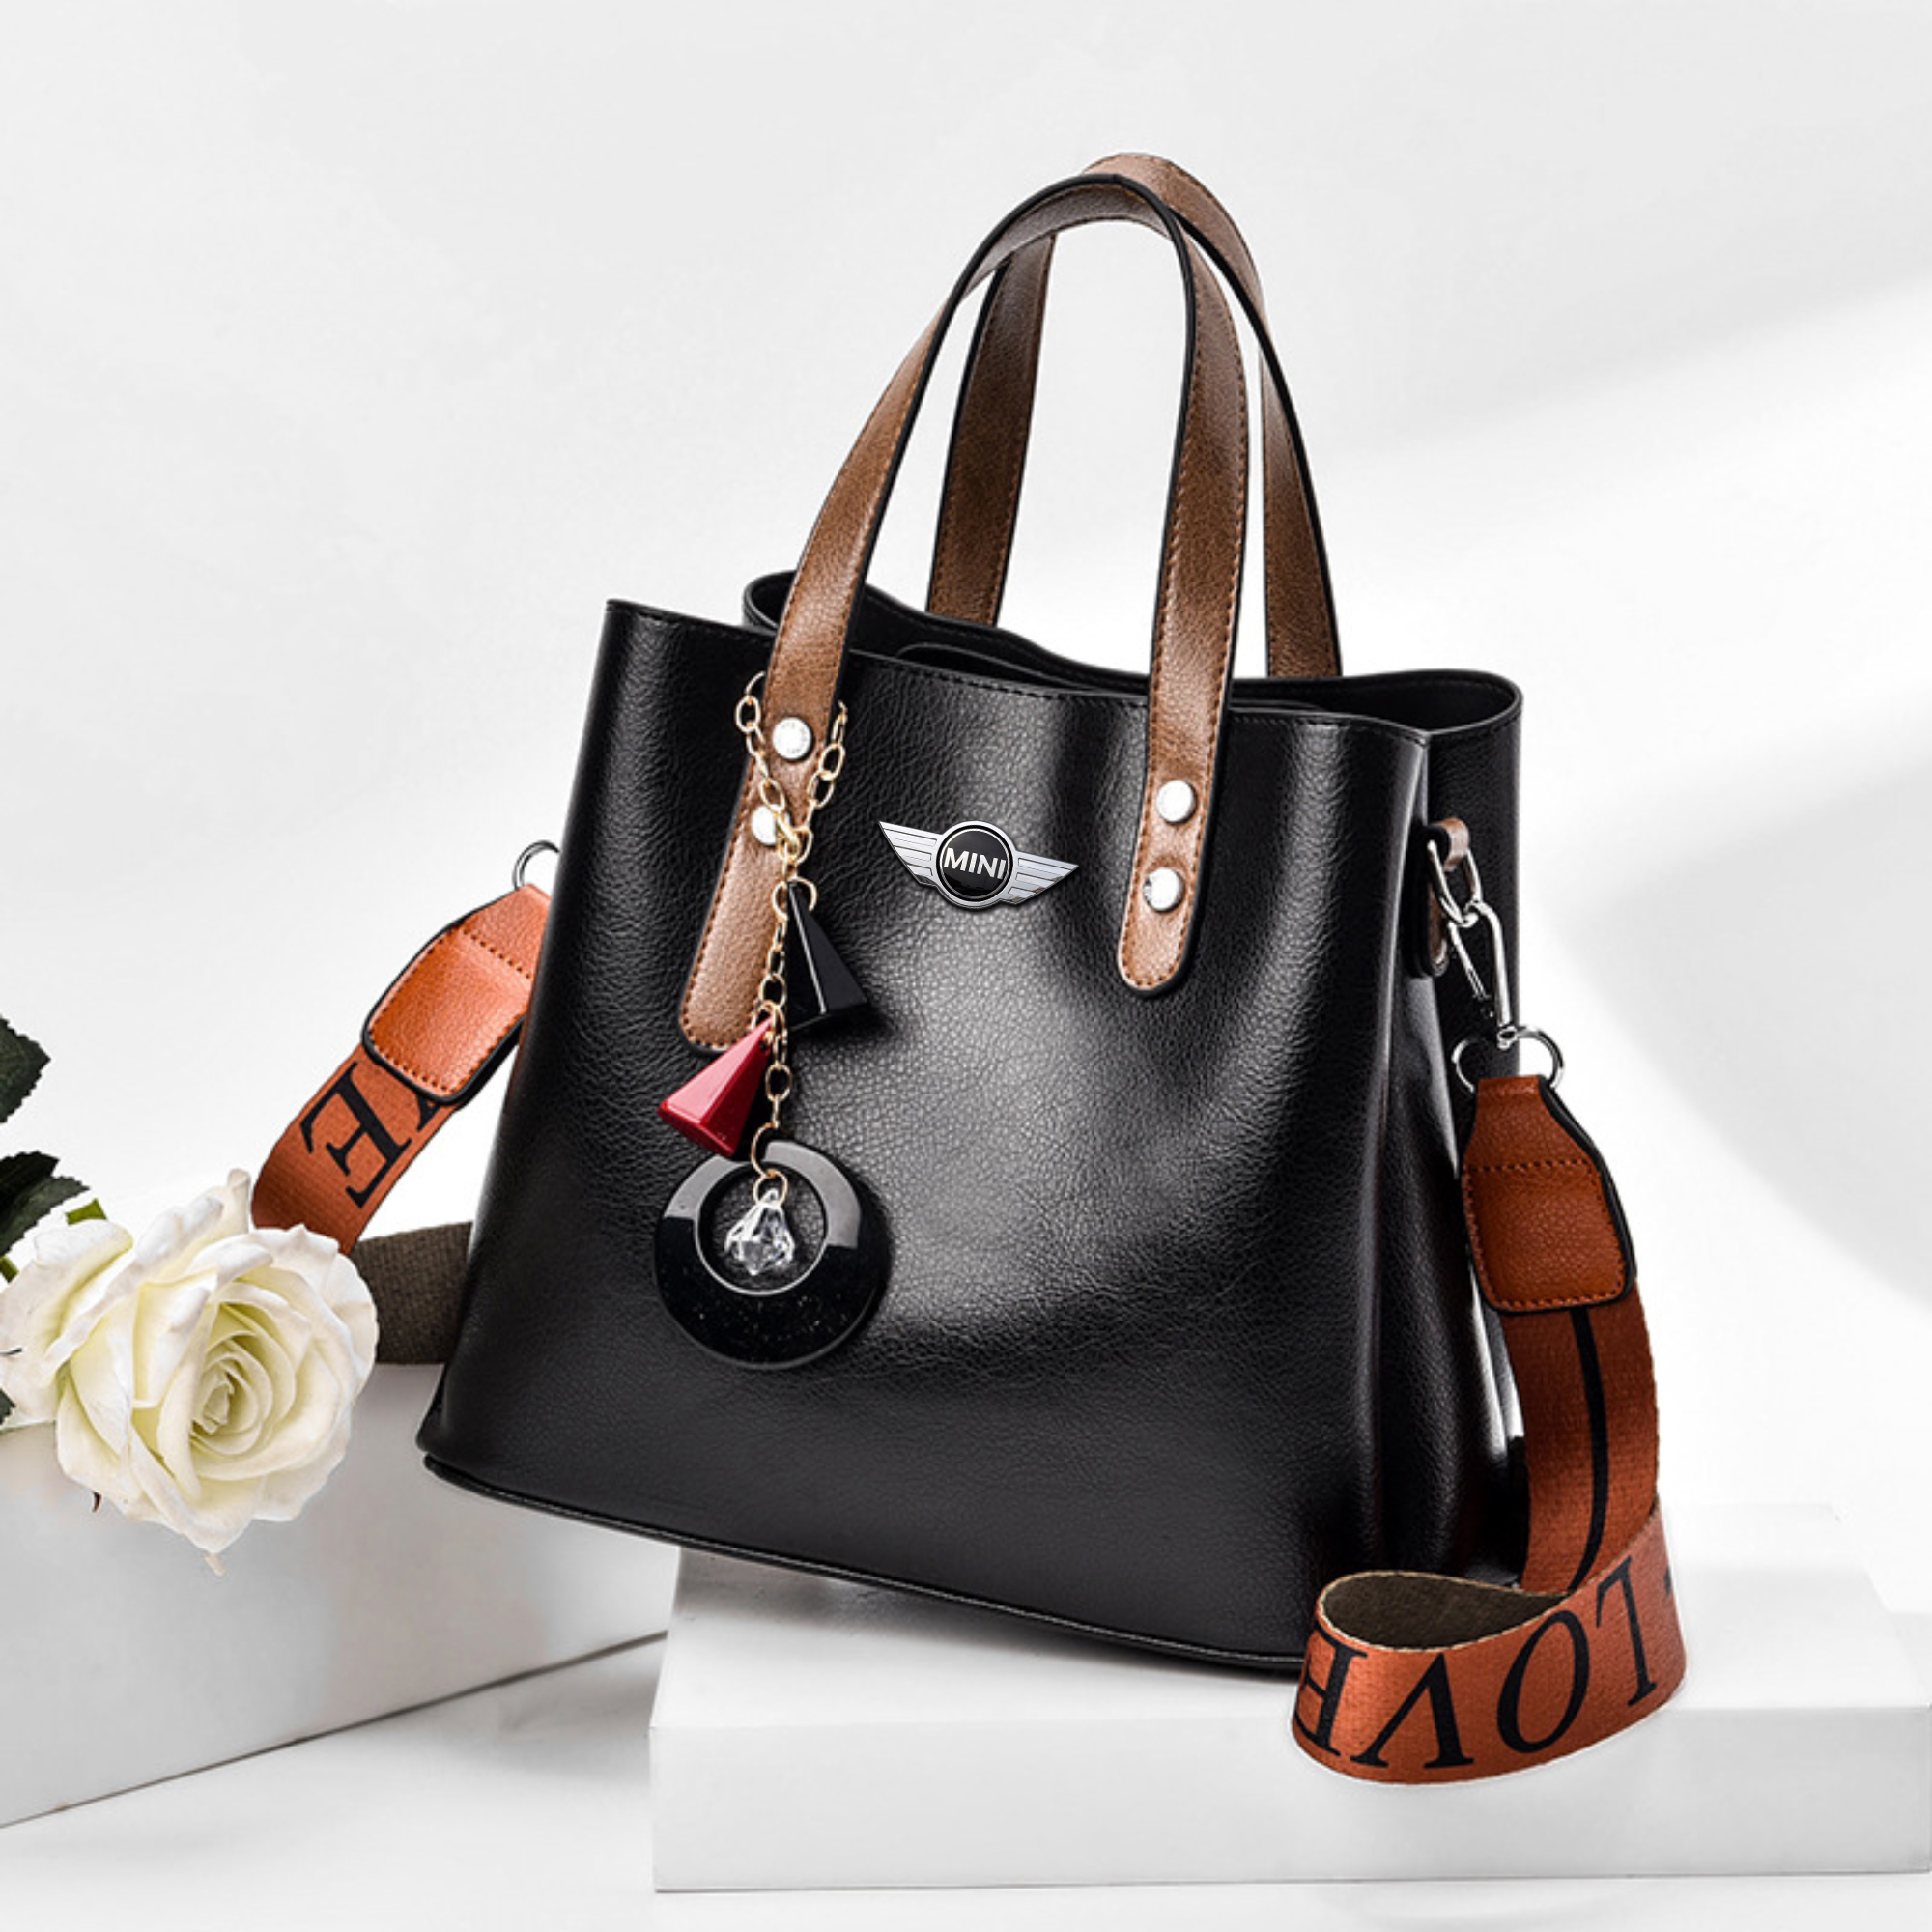 Cooper Nylon Crossbody (Teal)- Designer leather Handbags